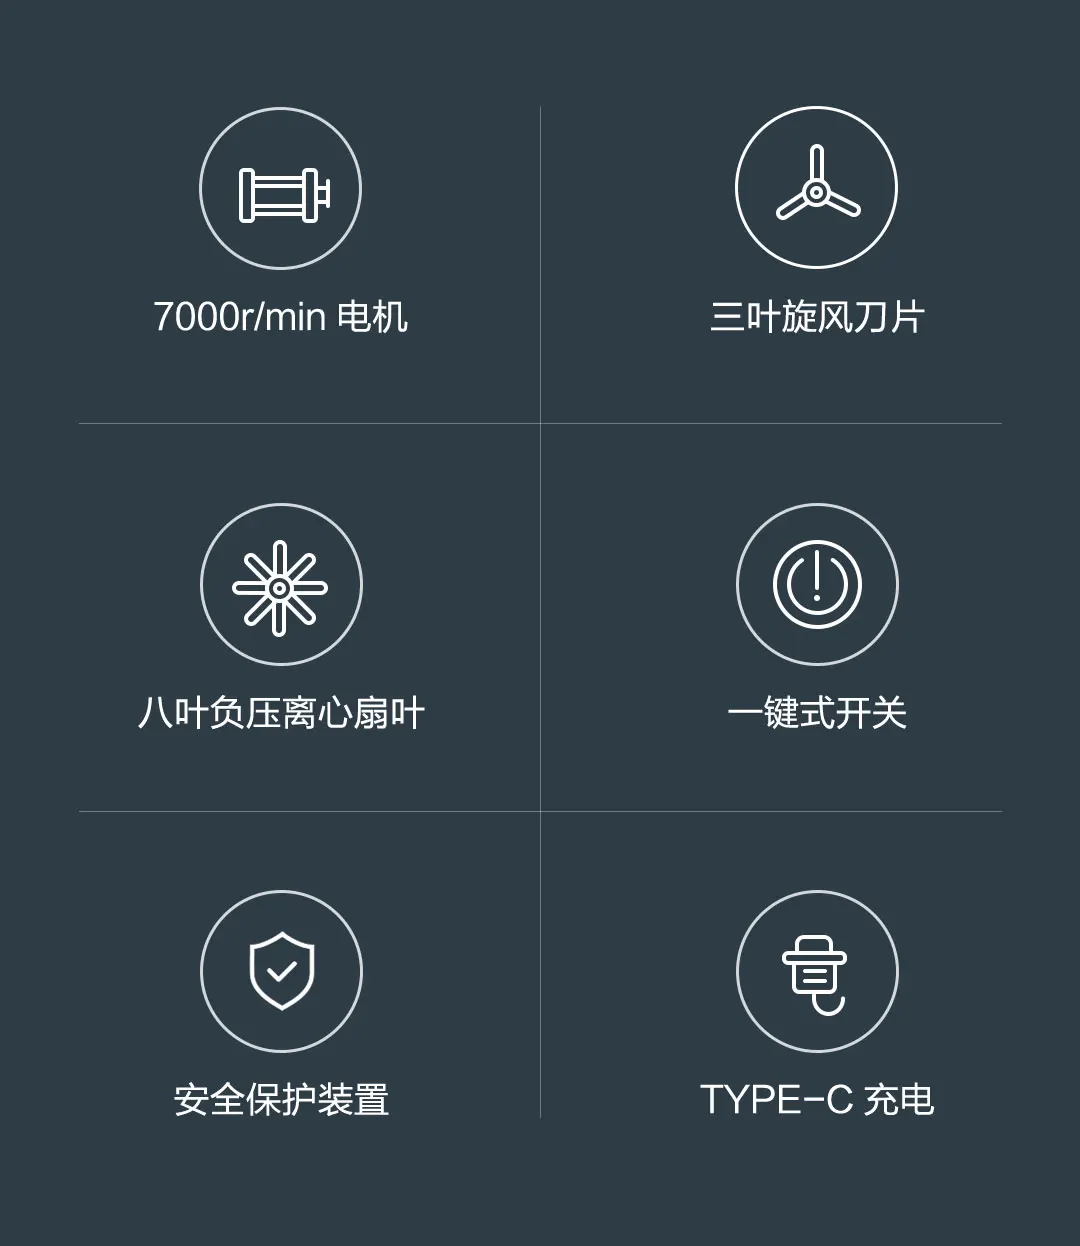 Xiaomi Longife триммер для волос CS-622 белый триммер Тип C зарядка трилистник Вихрь лезвие